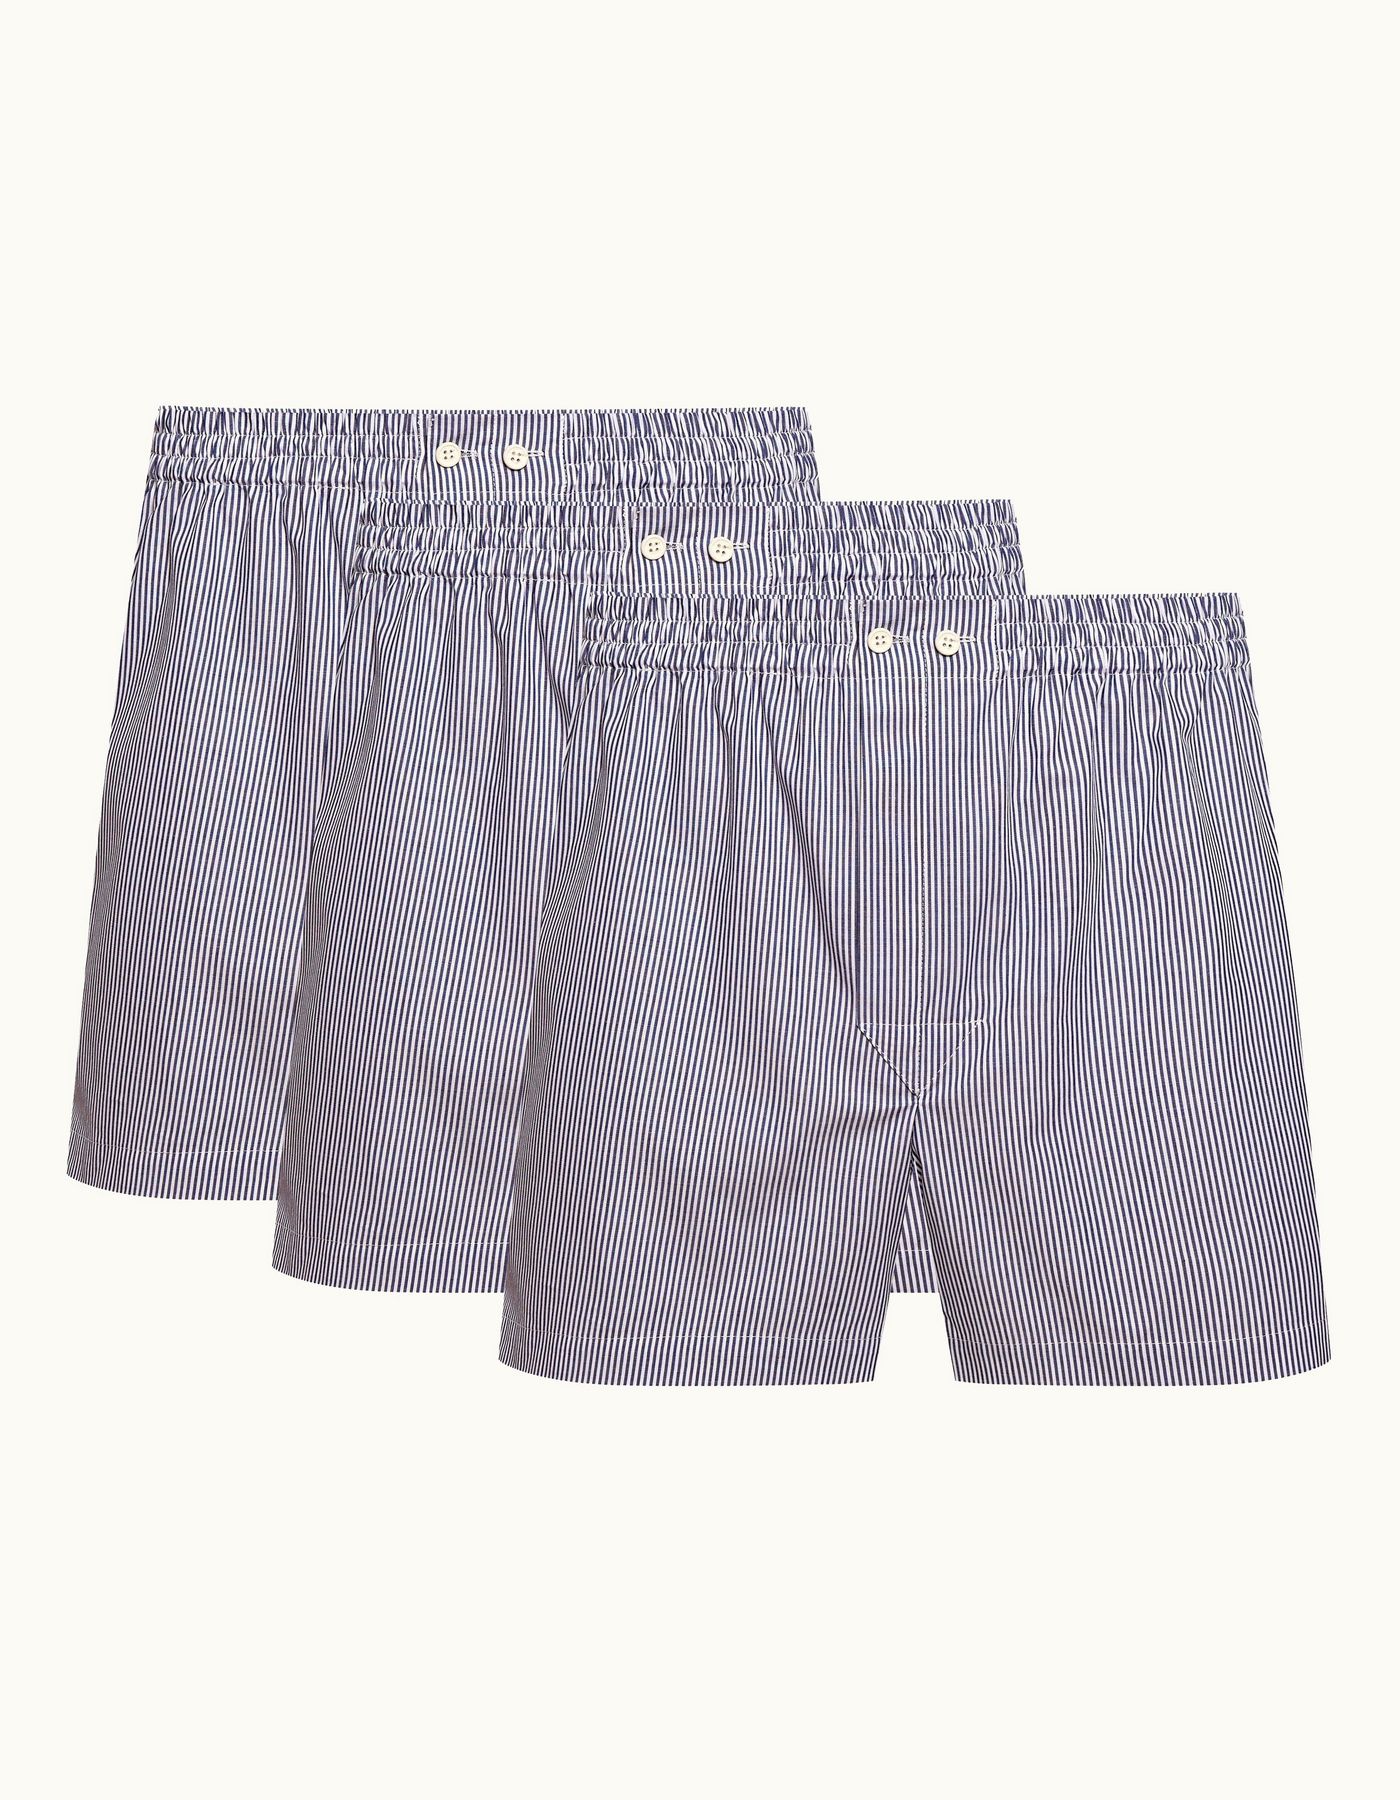 Boxer Short - Mens Navy/White Stripe 3 Pack Cotton Boxer Shorts